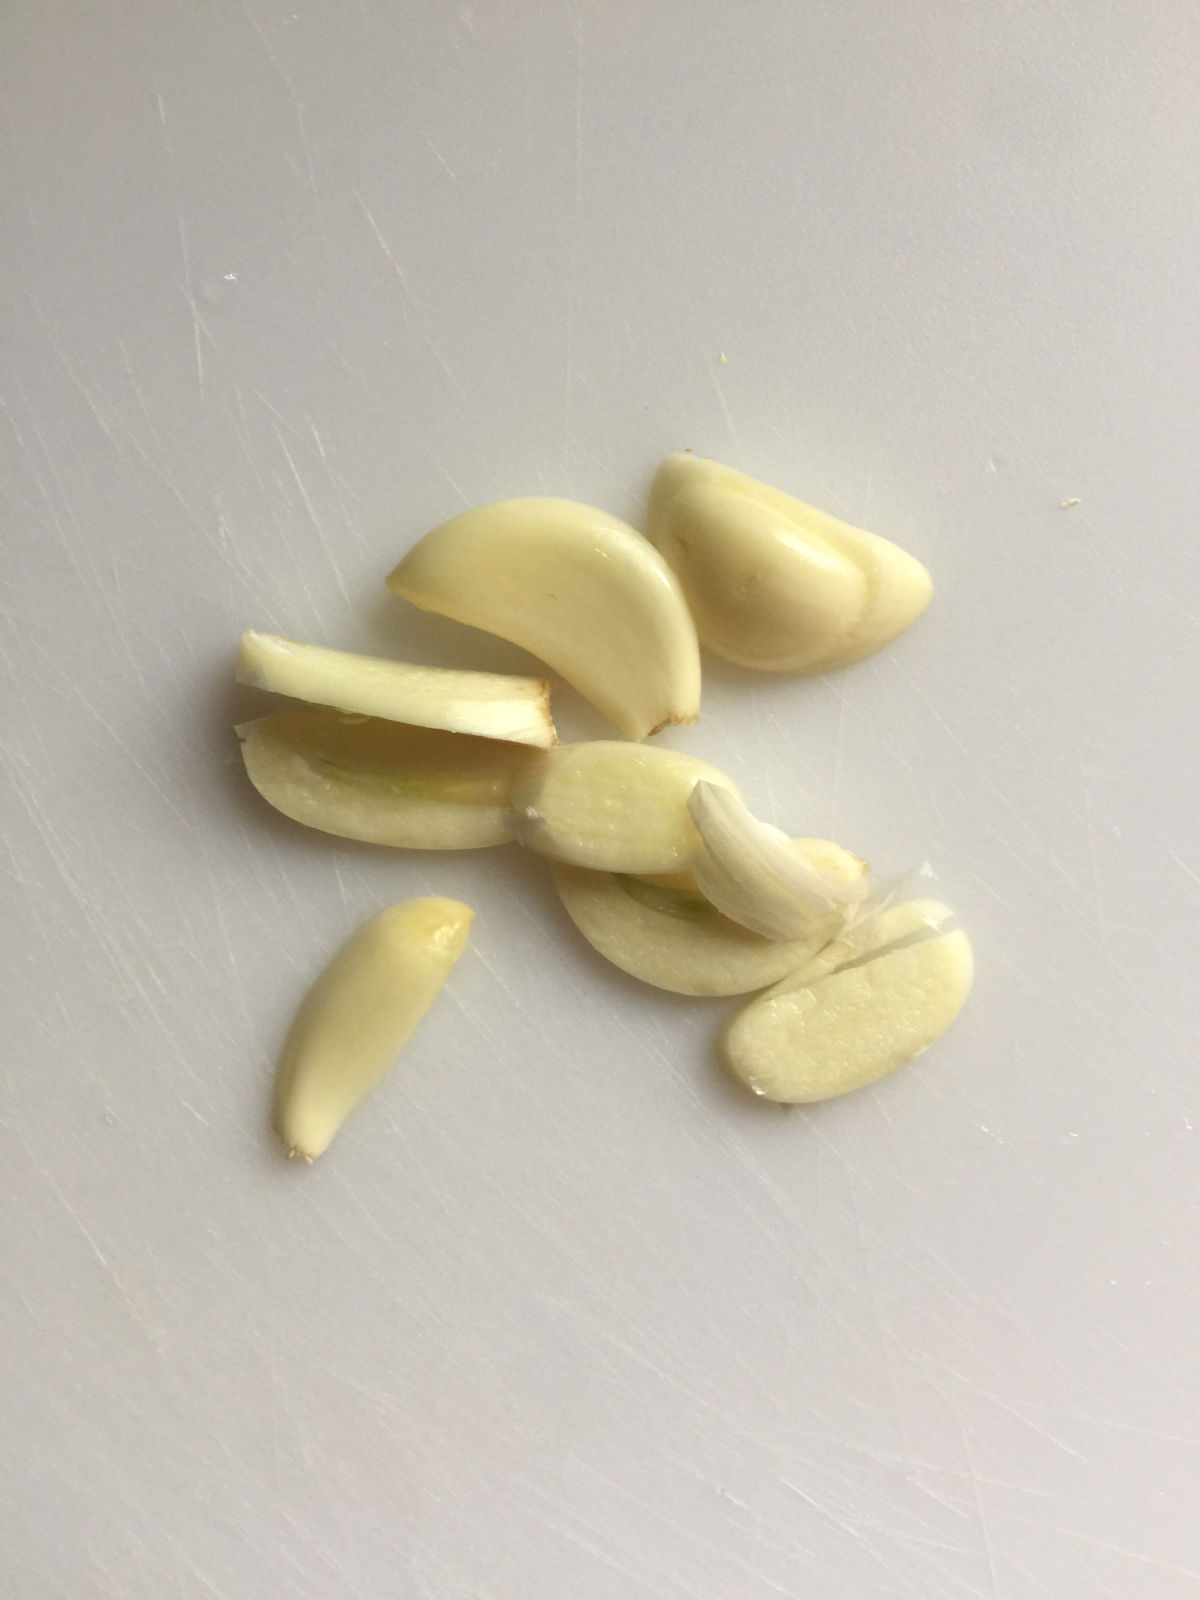 A close up view of garlic slides.